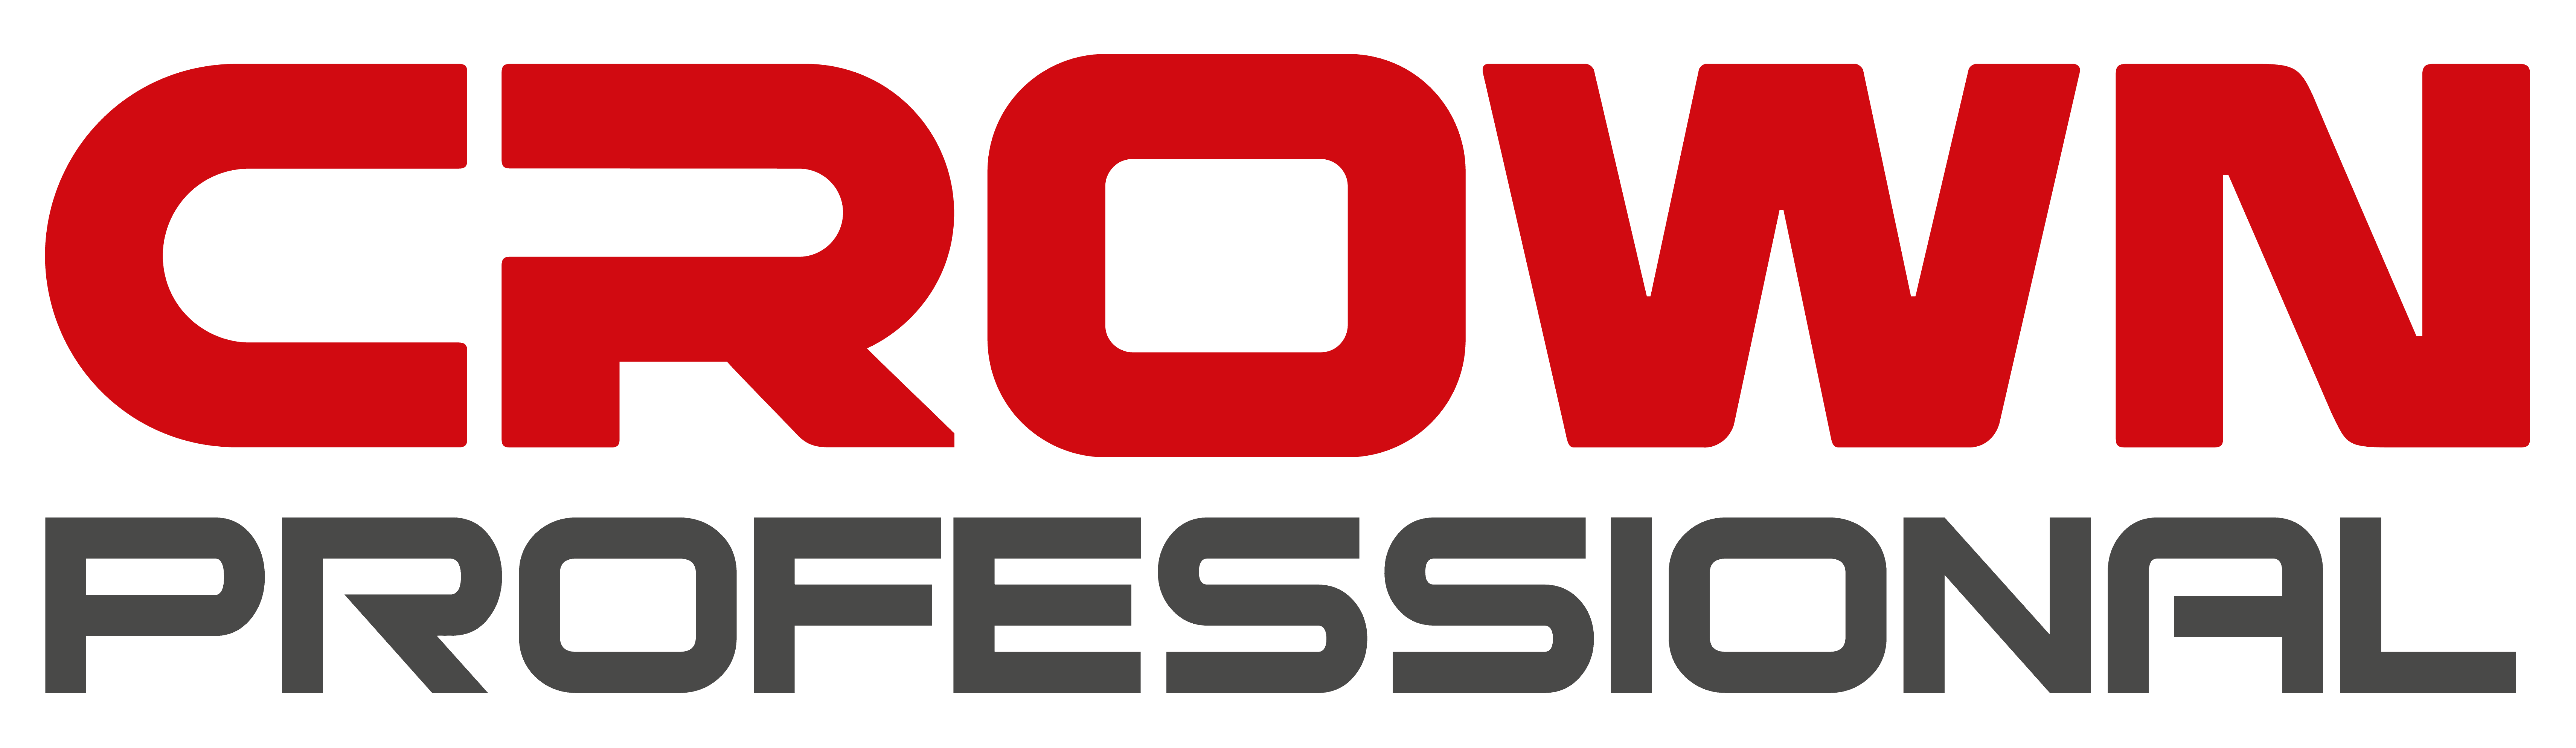 CROWN_logo_professional-01